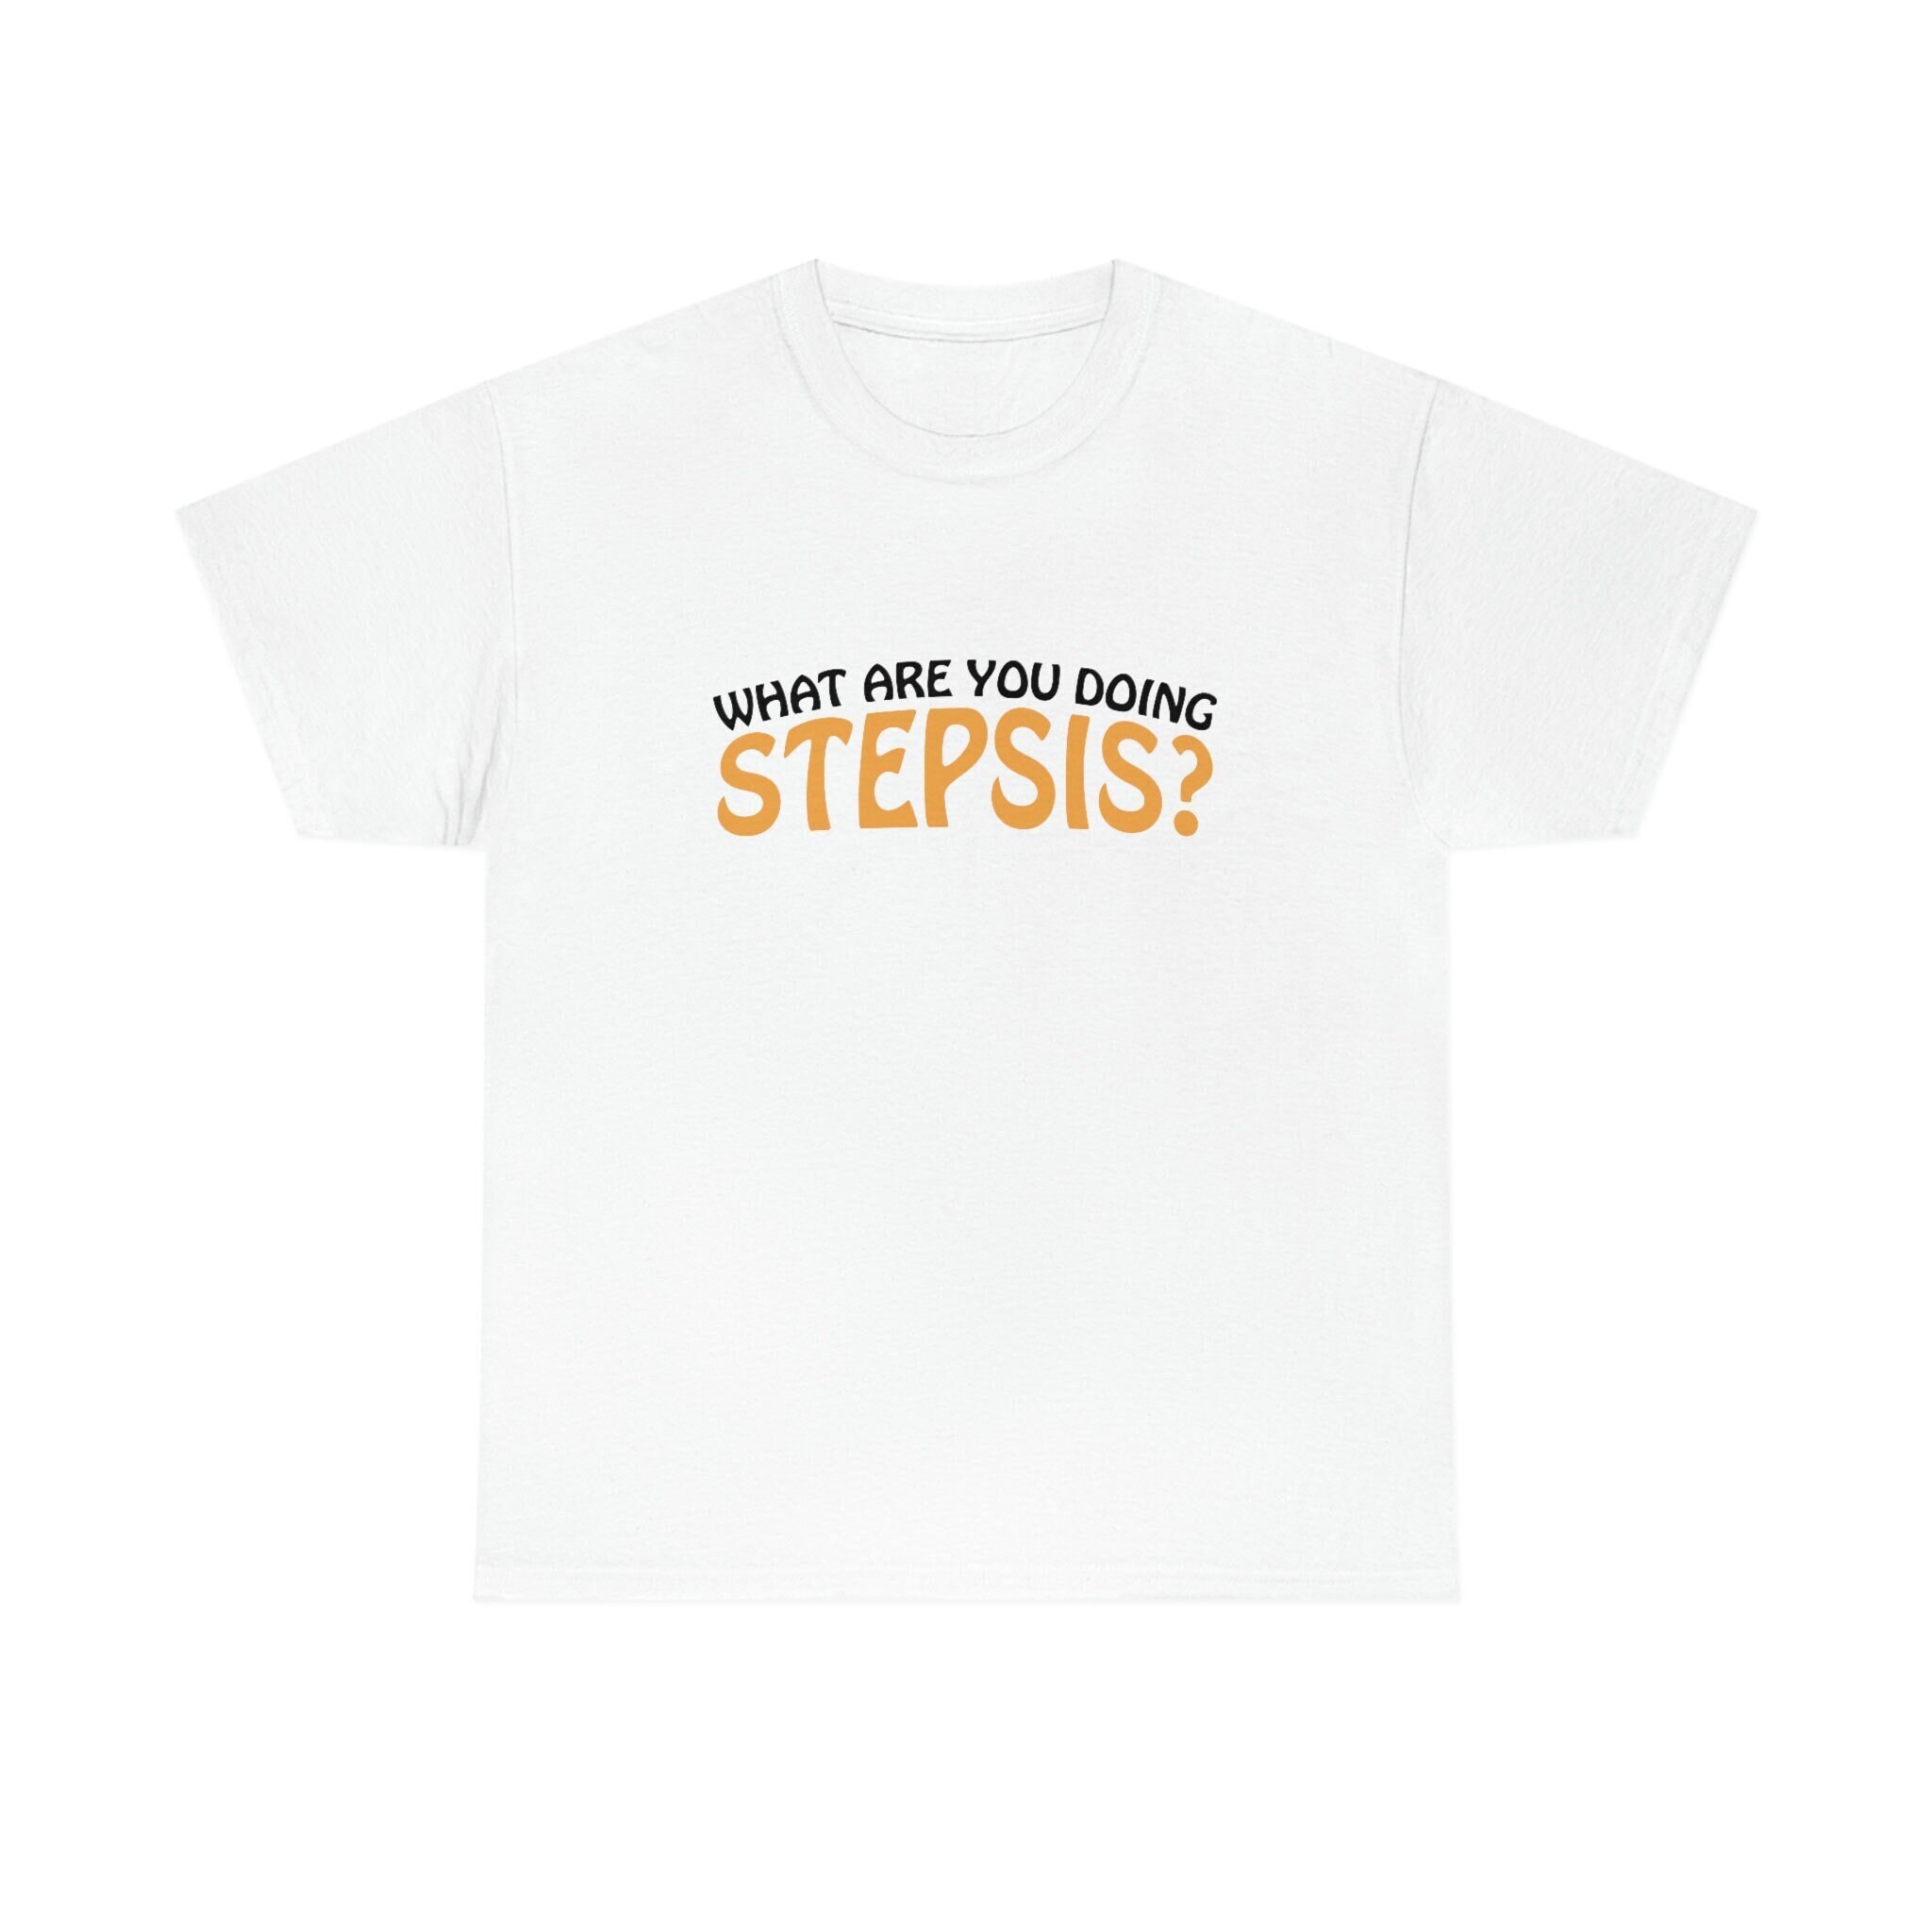 Stepsis shirt for sale  